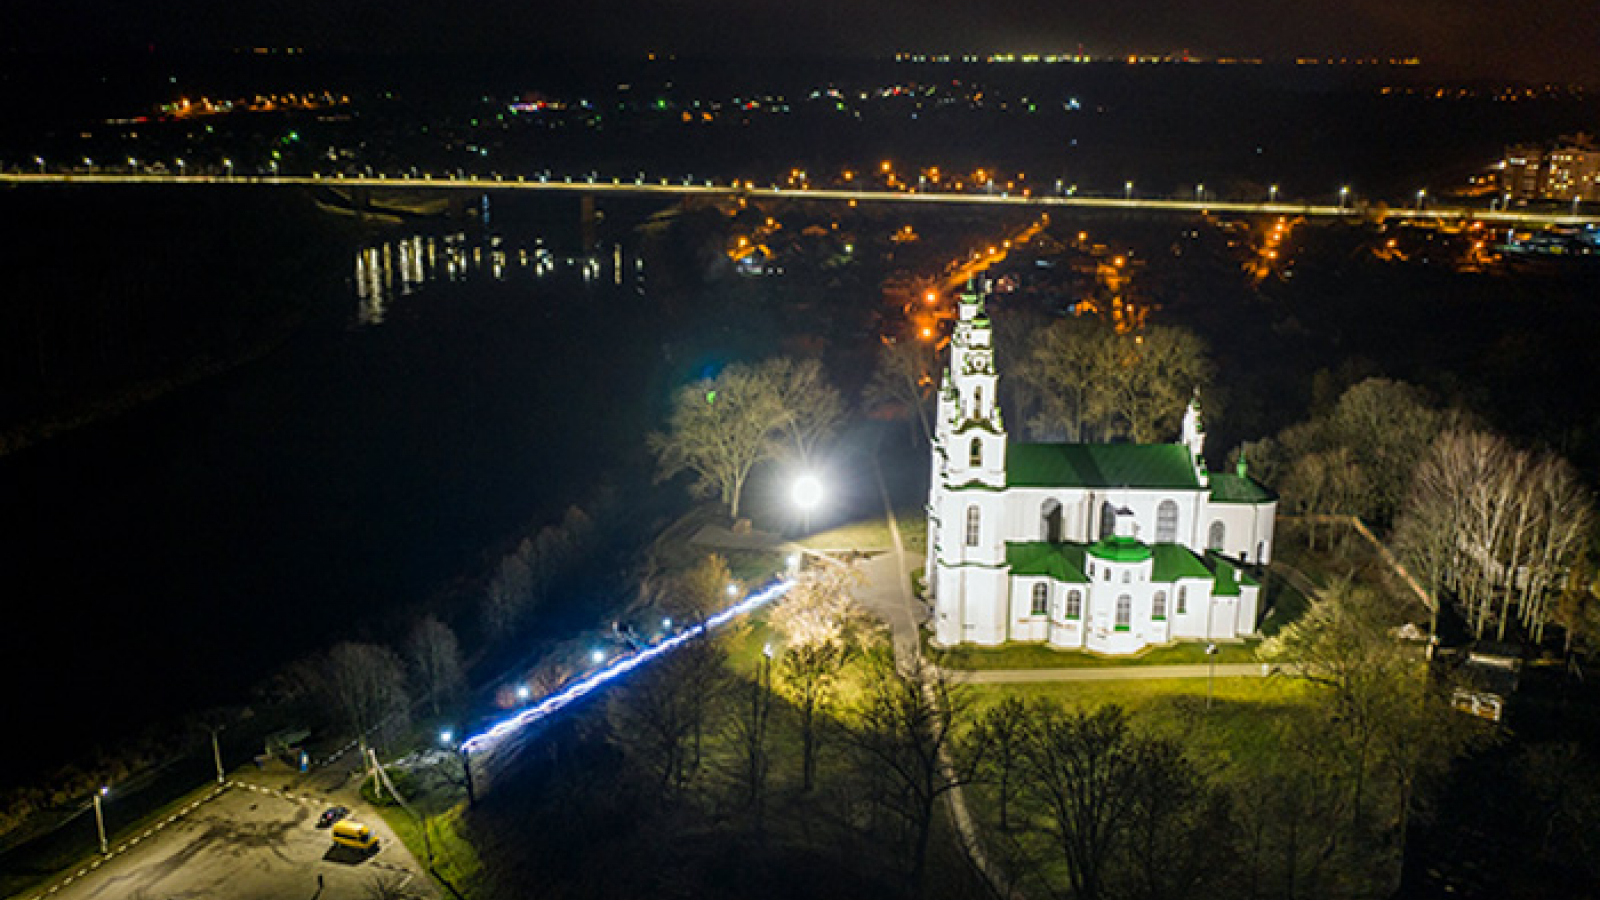 Public lighting in Polack, Belarus, more energy efficient thanks to EU 